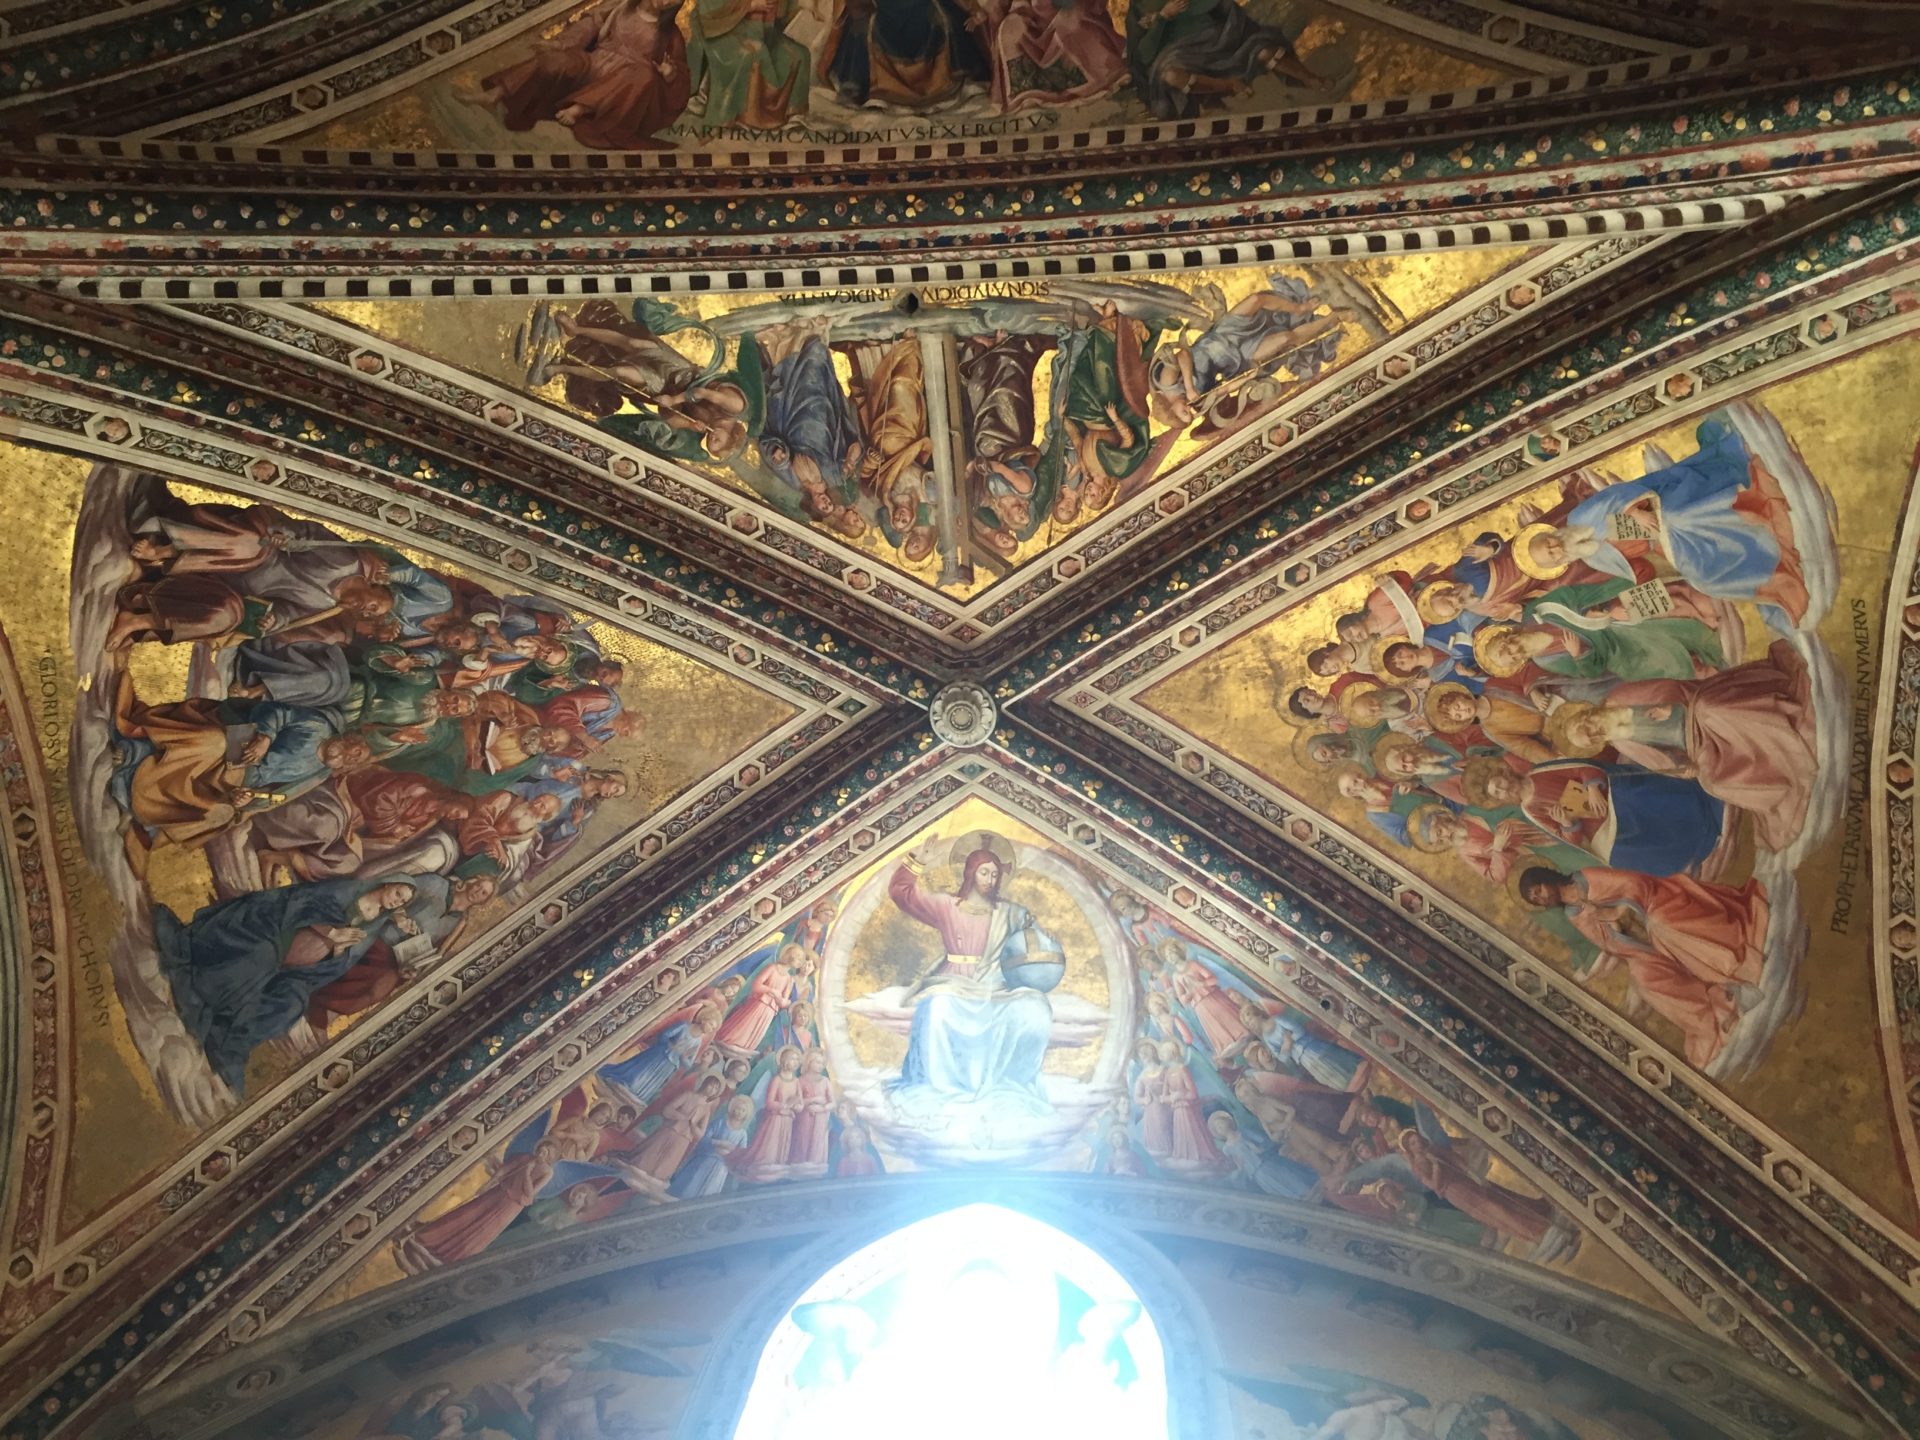 <img src="http://marenostrum.pl/wp-content/uploads//2019/10/Fra-Angelico-San-Brizio.jpeg" alt="San Brizio freski Fra Angelico" />